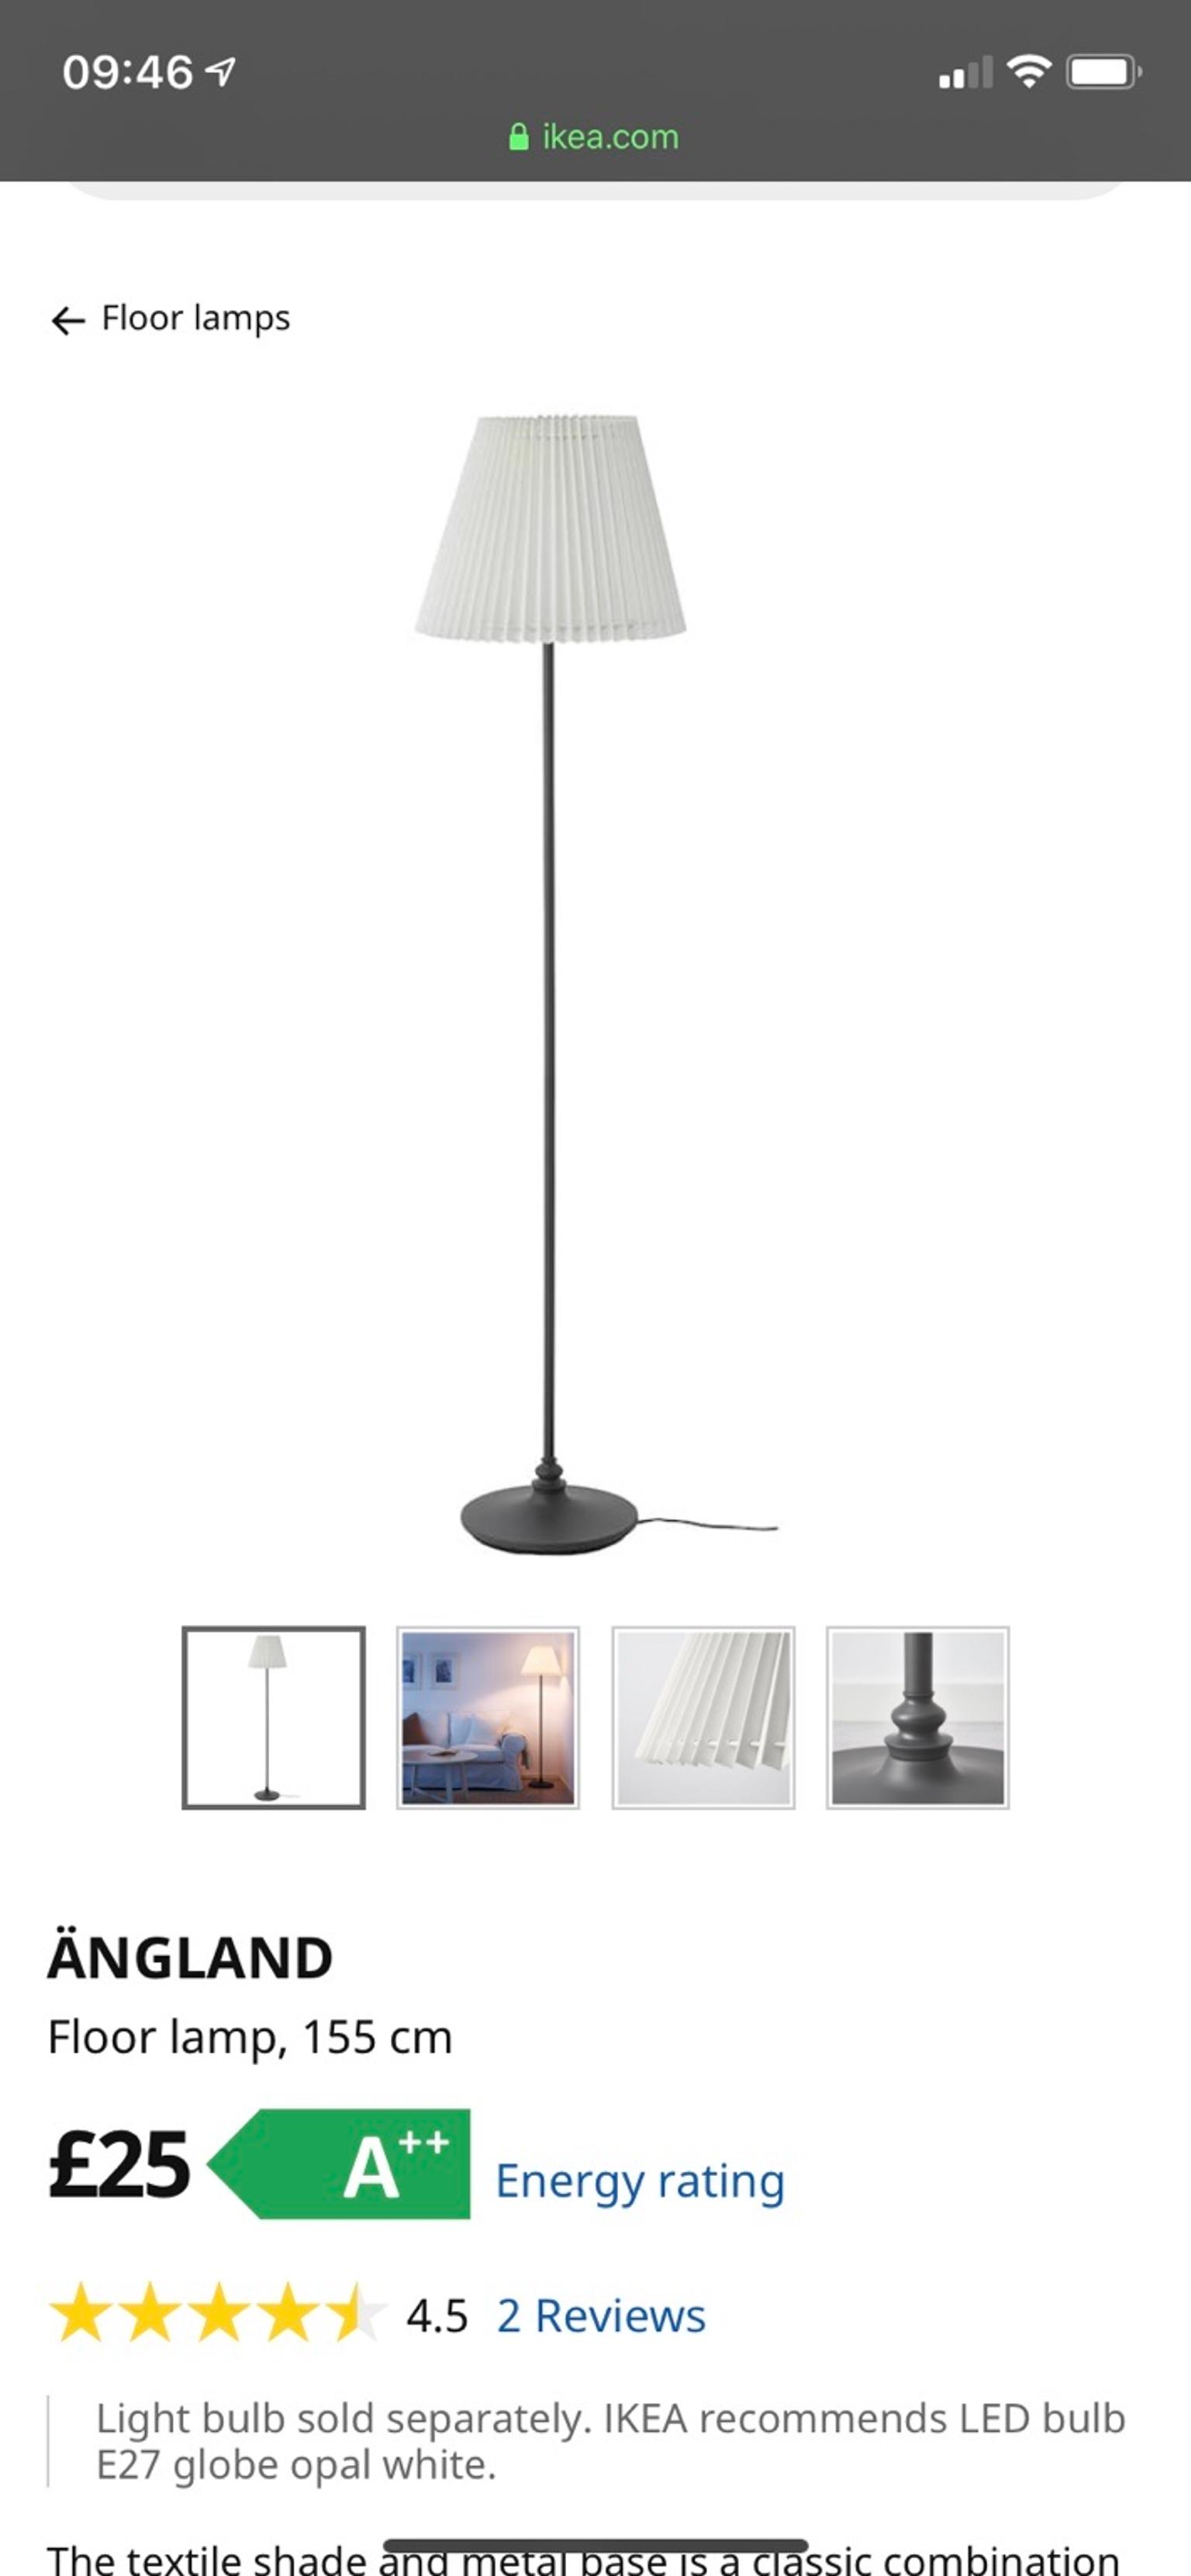 Ikea Floor Lamp Matching Lampshade In, Ikea Angland Table Lamp